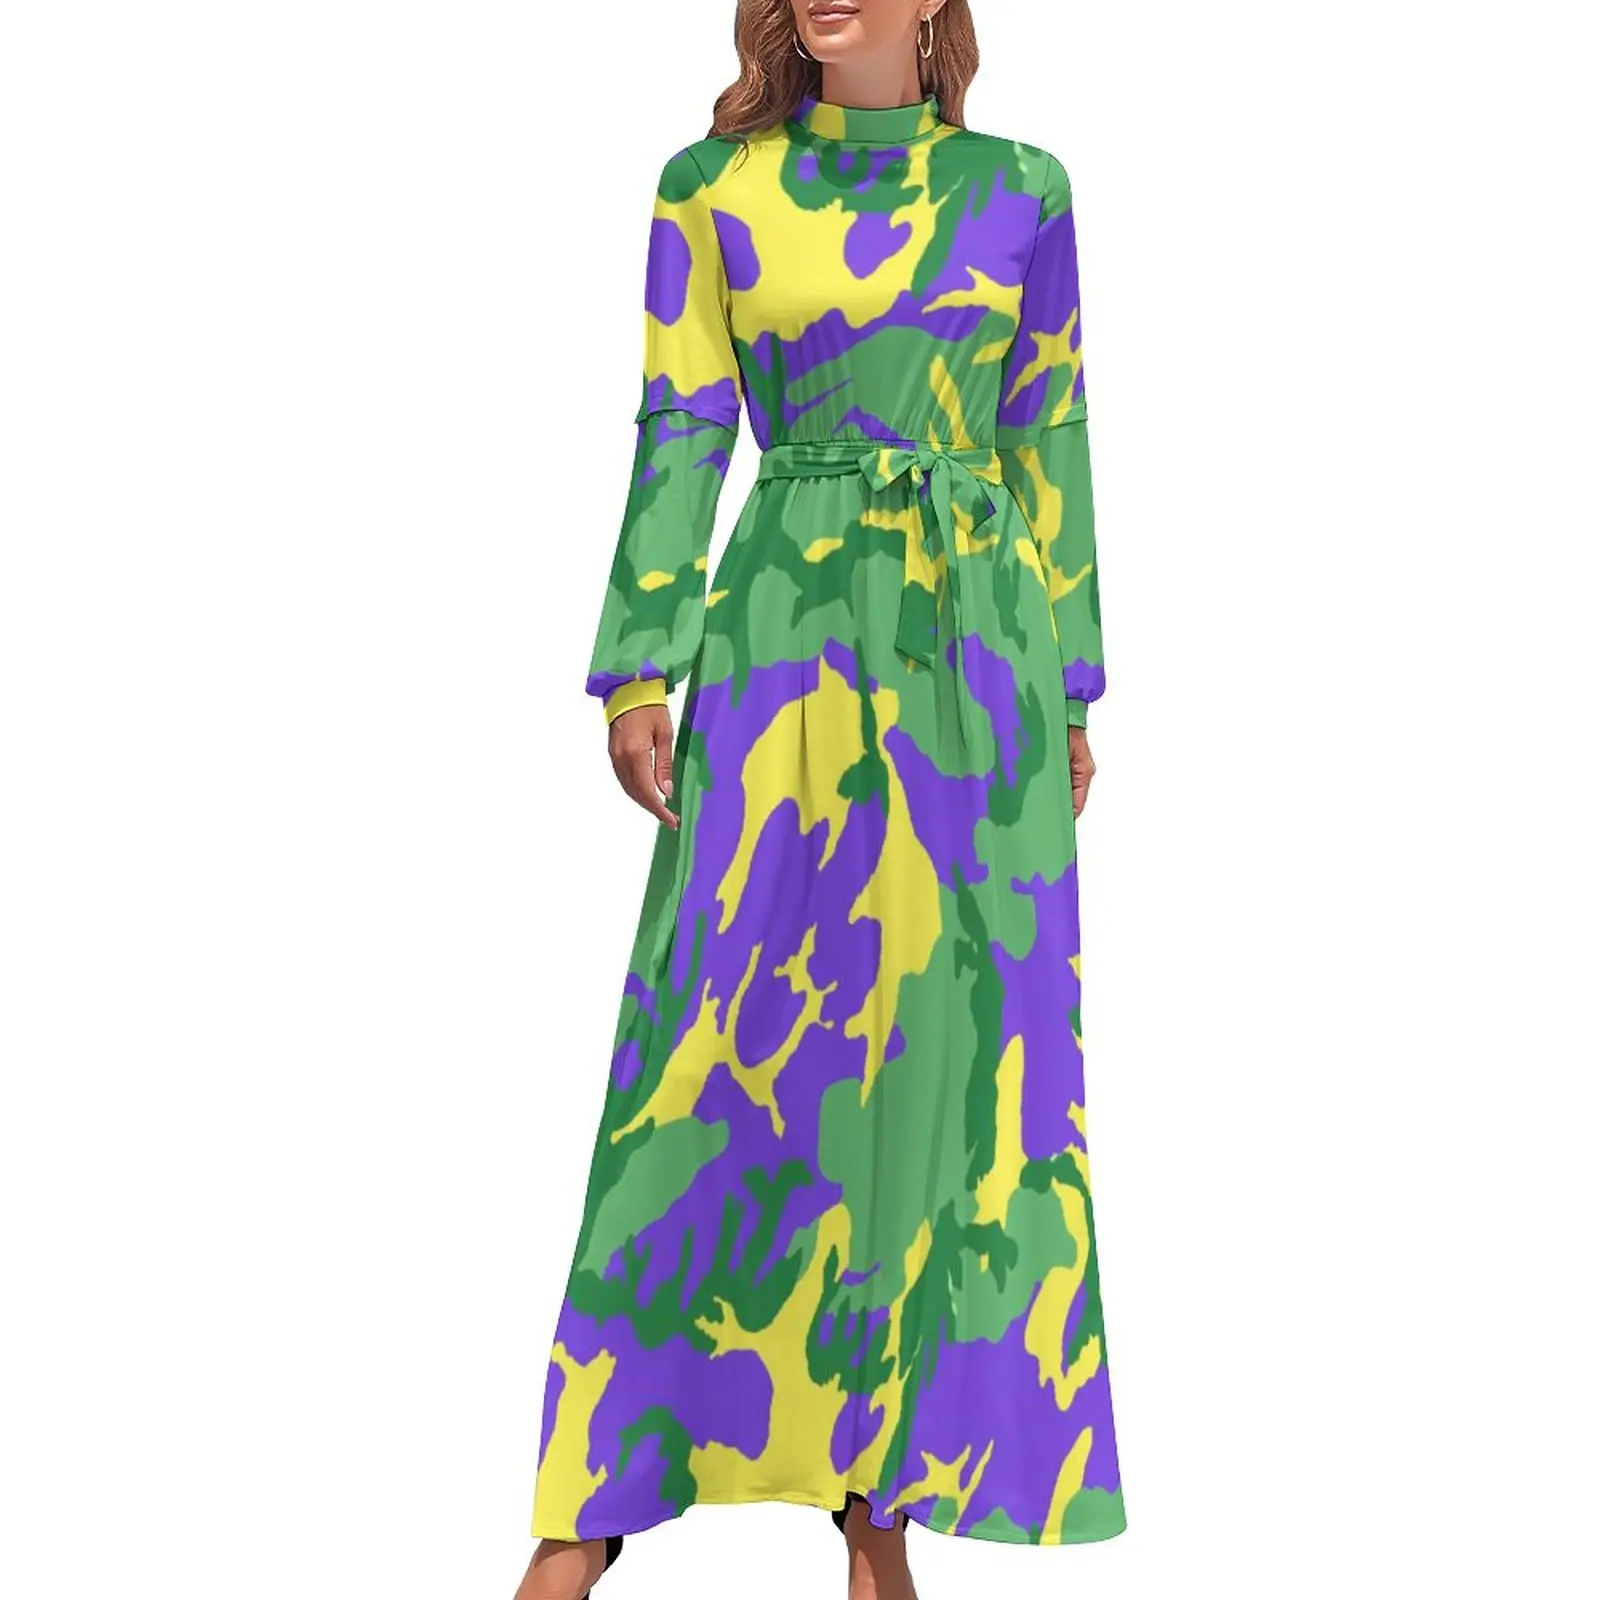 

Mardi Gras Camo Dress Colorful Camouflage Street Wear Boho Beach Dresses Ladies Long-Sleeve High Neck Party Long Maxi Dress